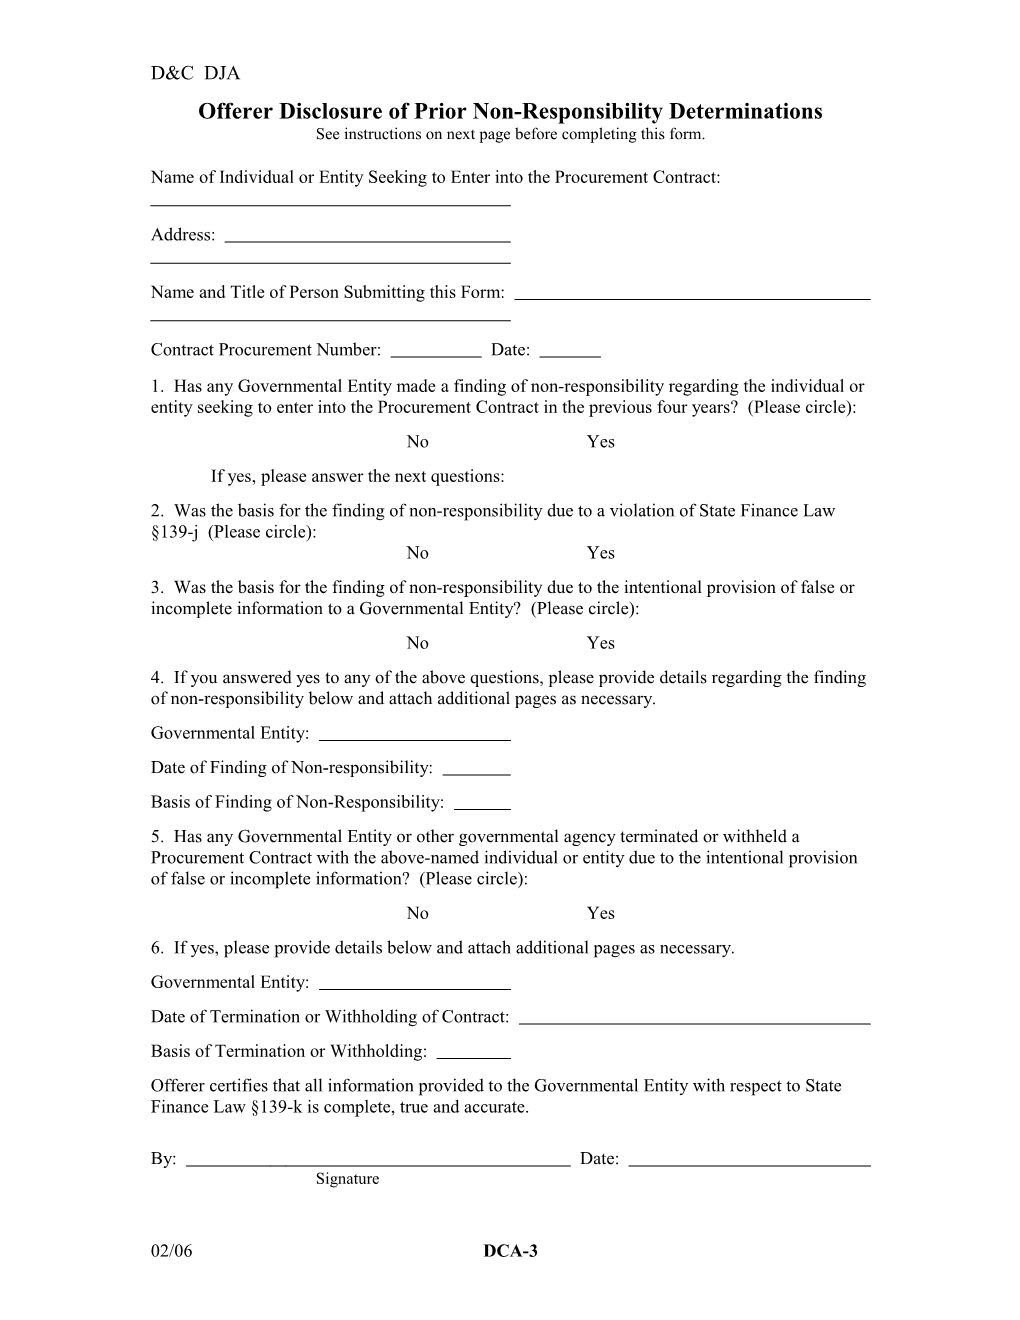 Form 2 - Contractor Disclosure of Prior Non-Responsibility Determinations